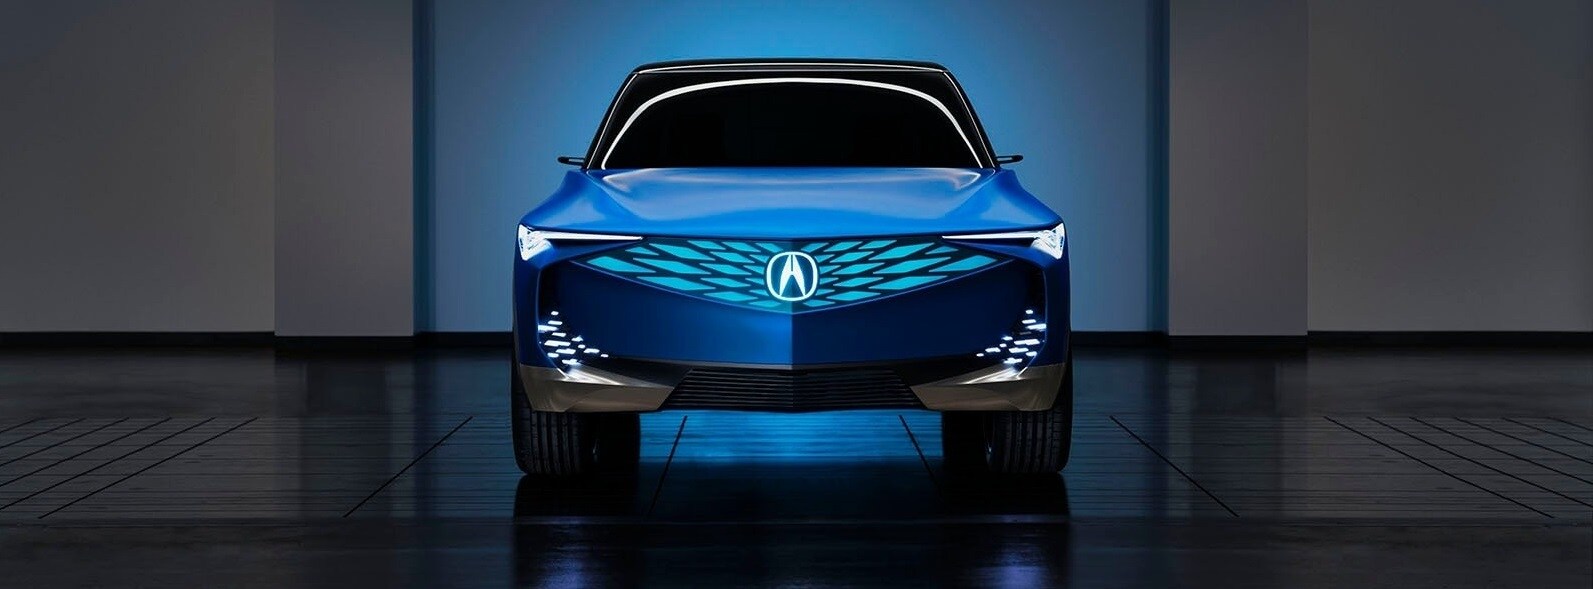 Acura ZDX EV Precision Concept